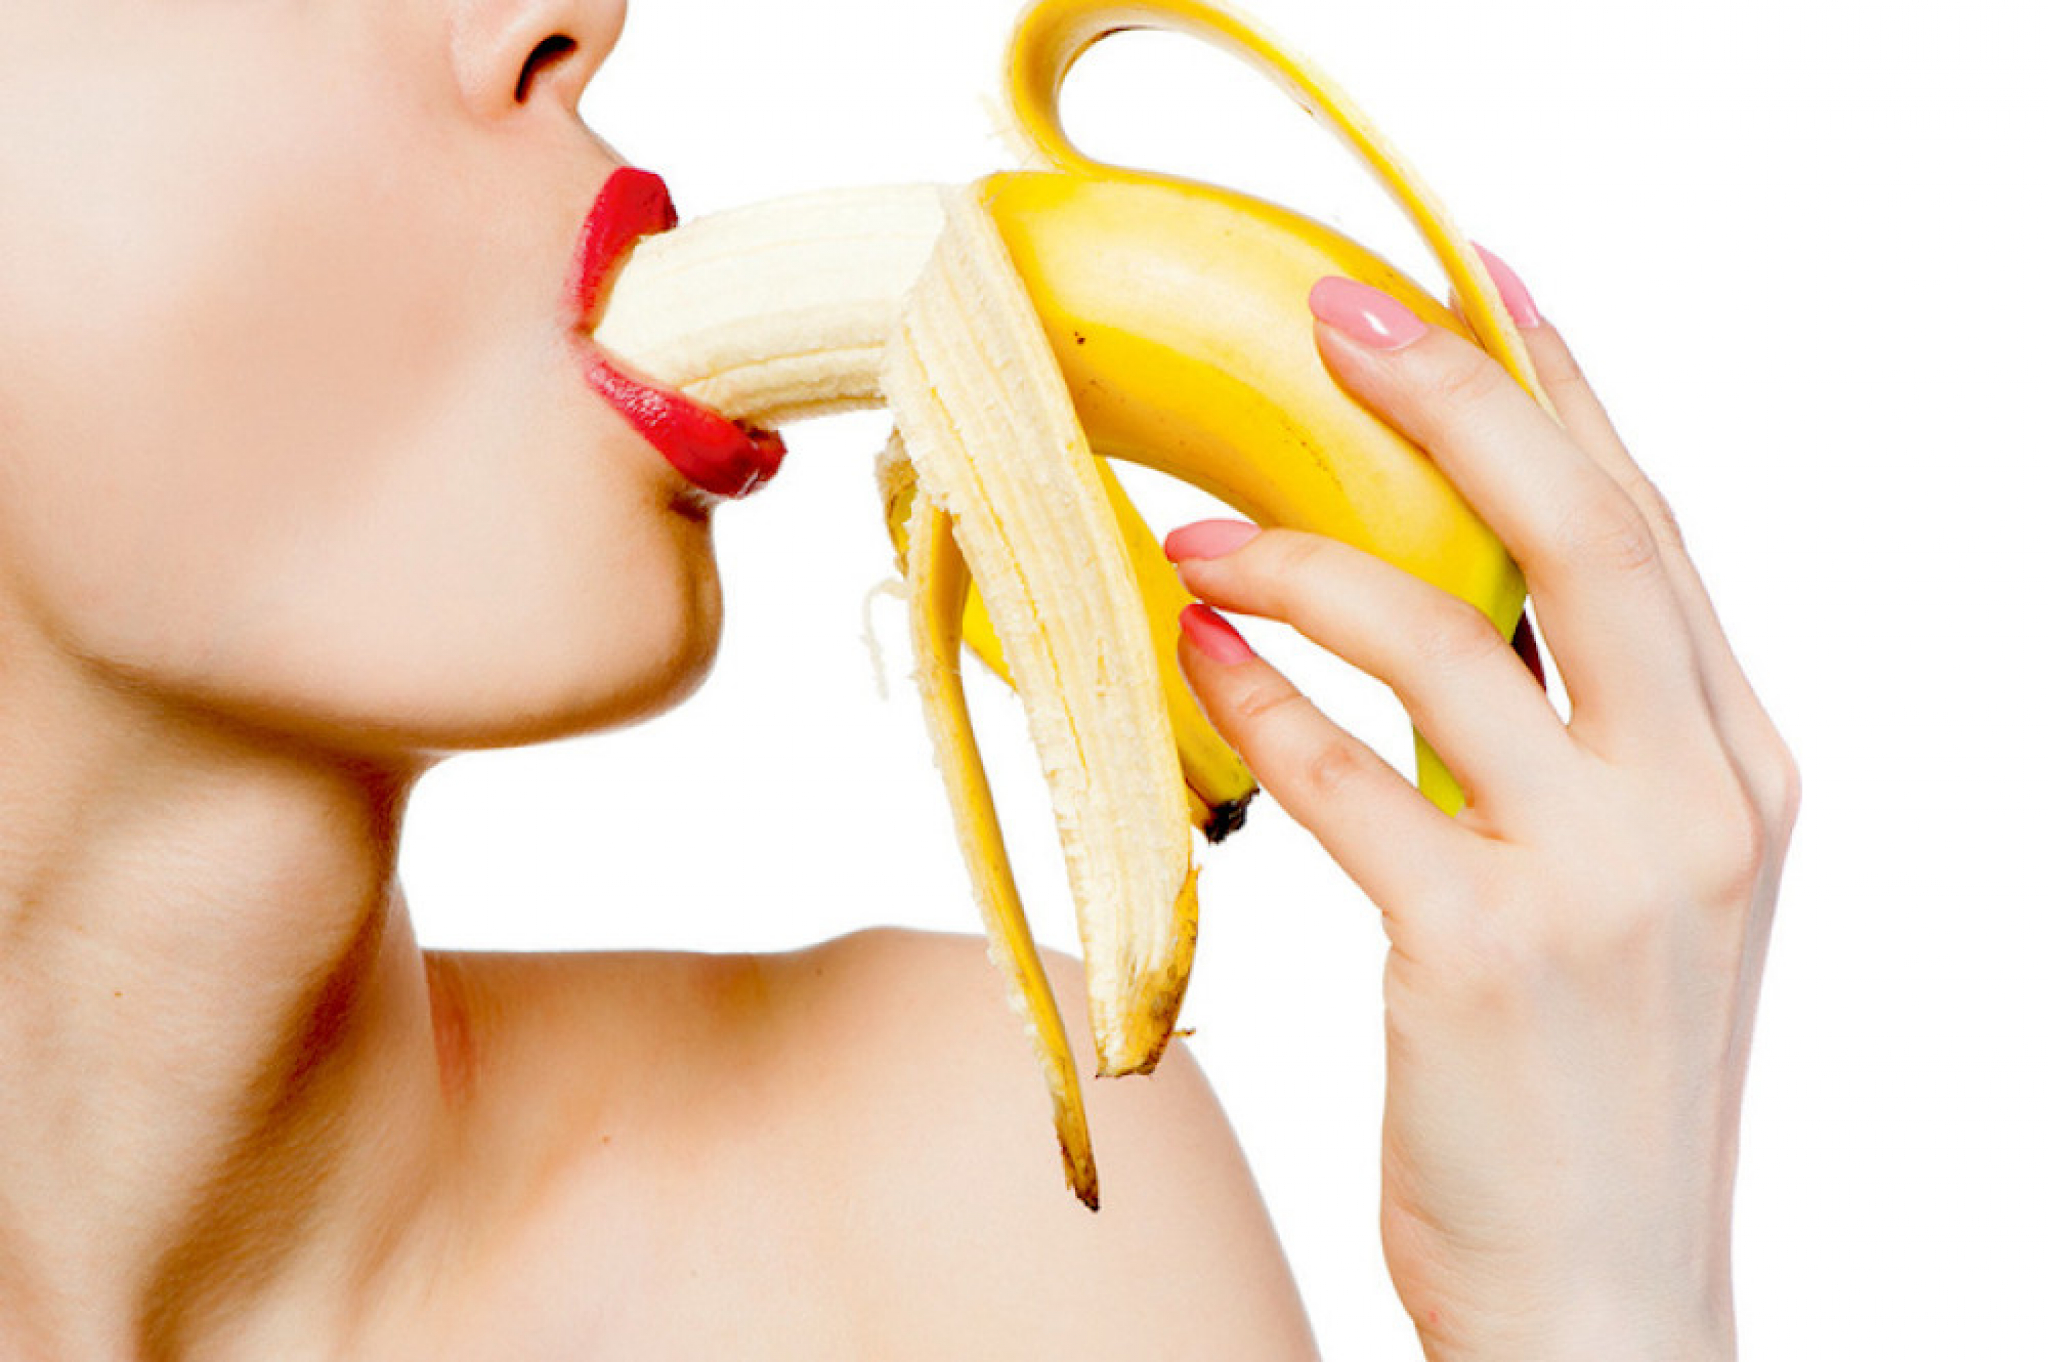 Техники отсоса. Девушка с бананом. Девушка ест банан. Фотосессия с бананом. Девушка с бананом во рту.